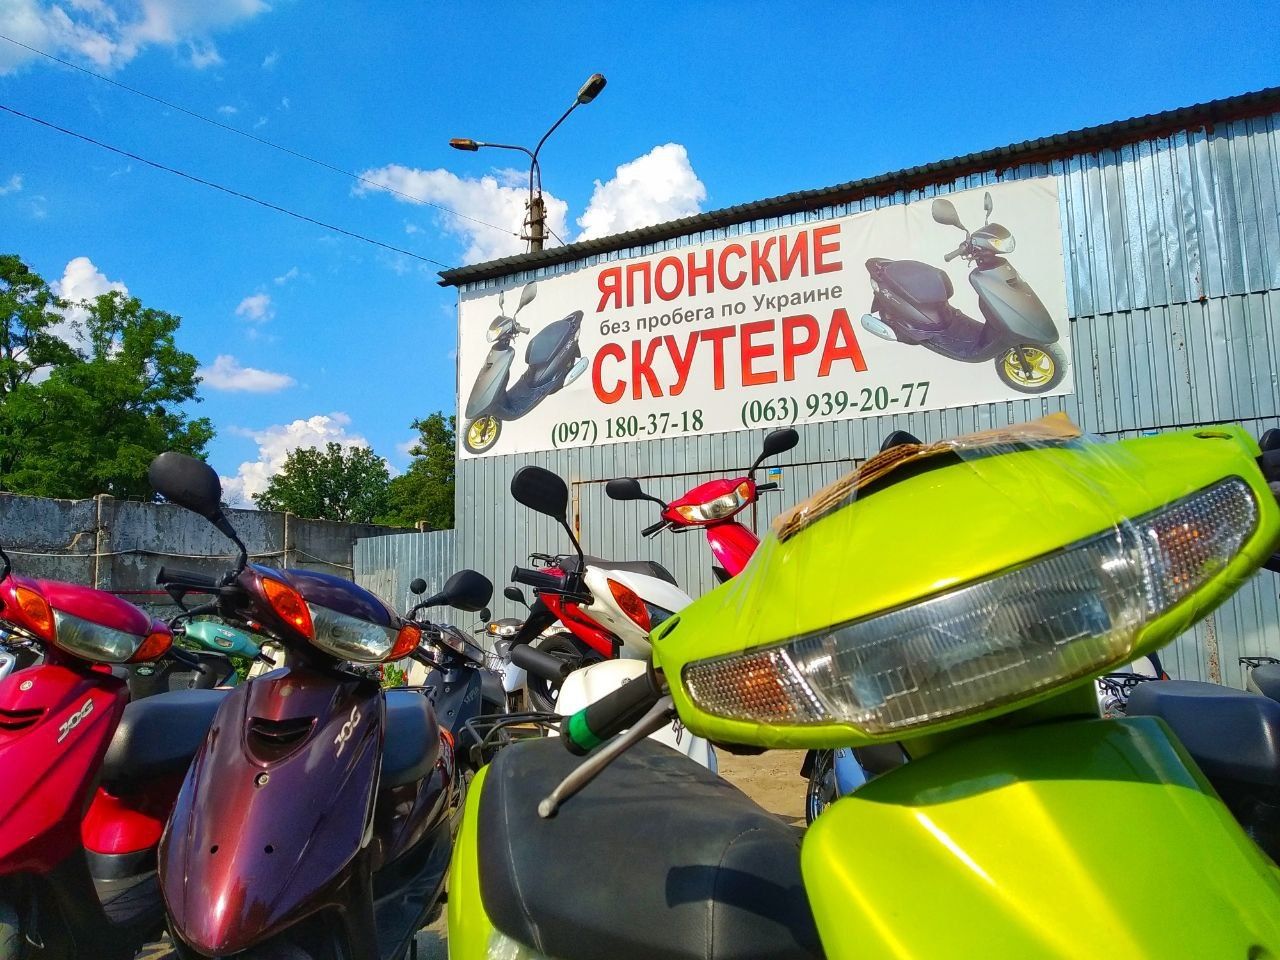 Скутер Honda Dio Af27 без пробега по Украине цена